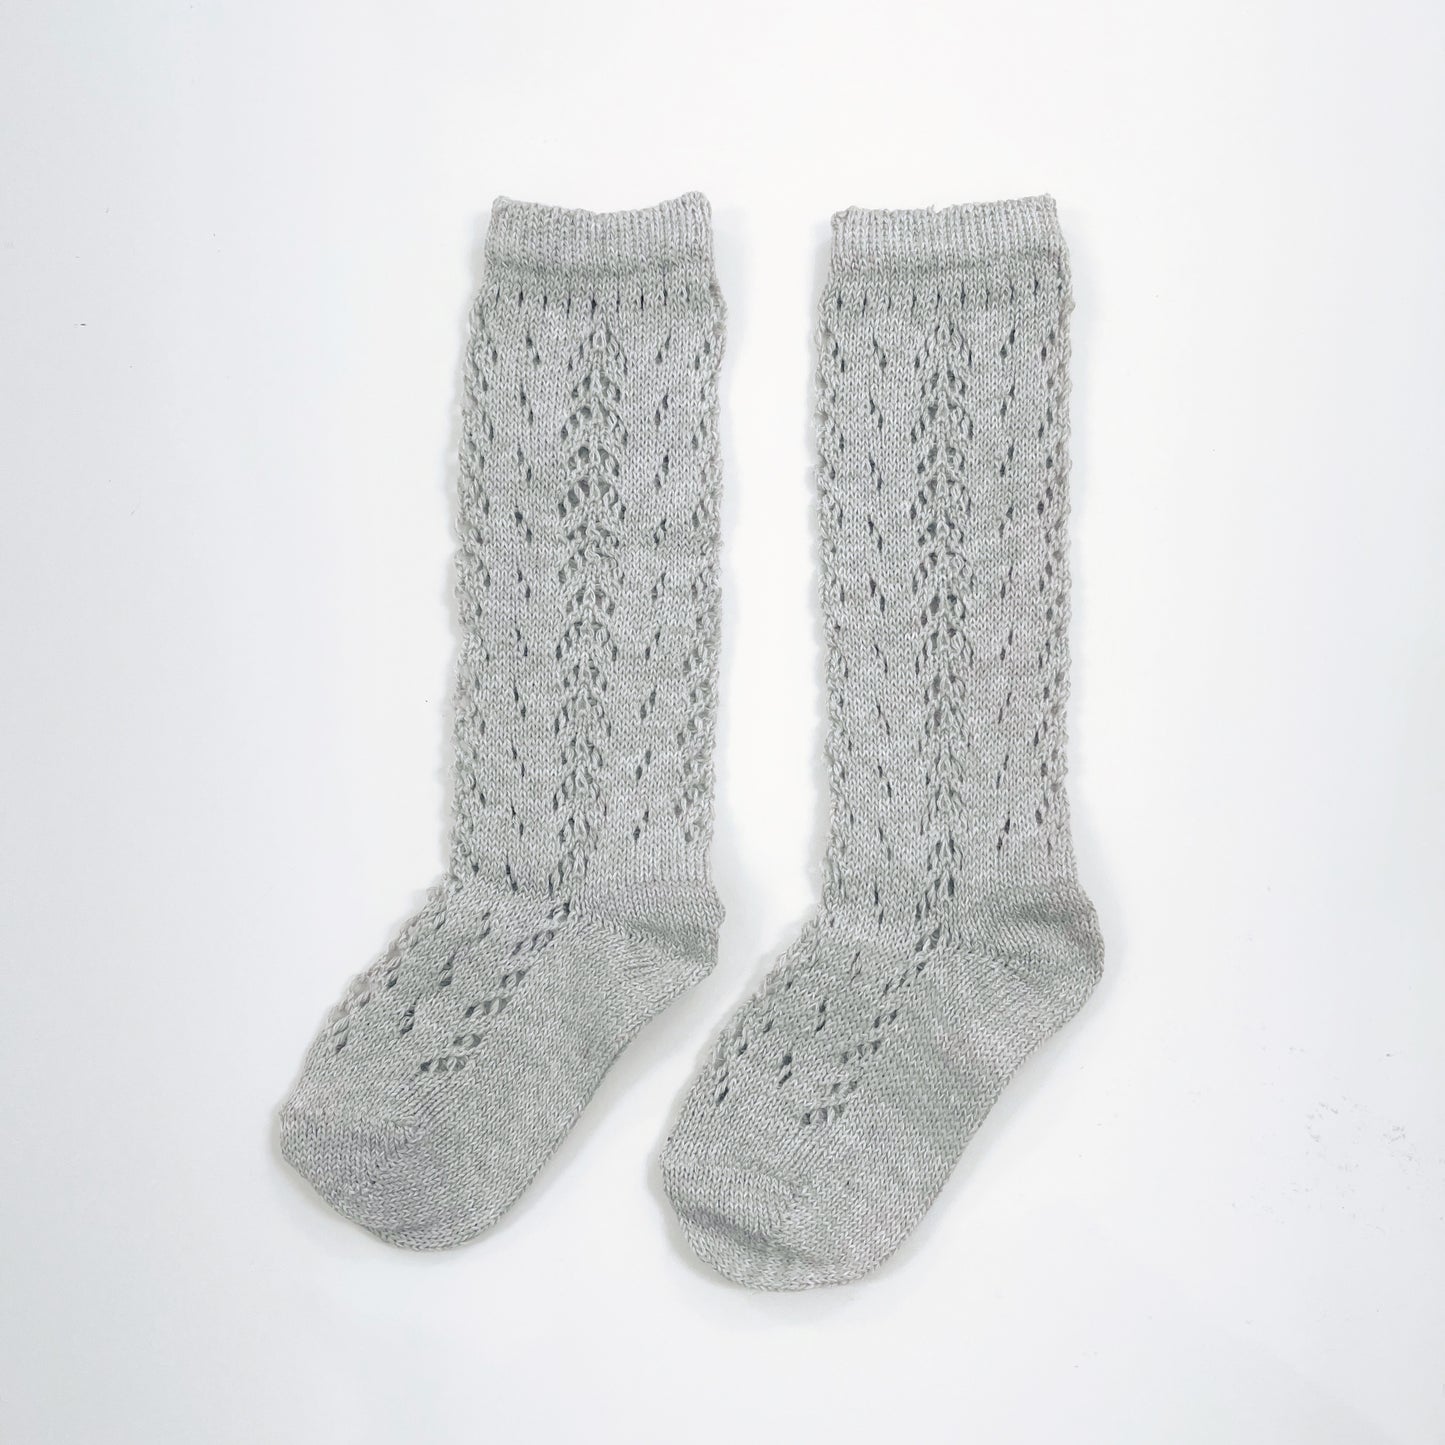 Crochet Knee Socks - Light Gray